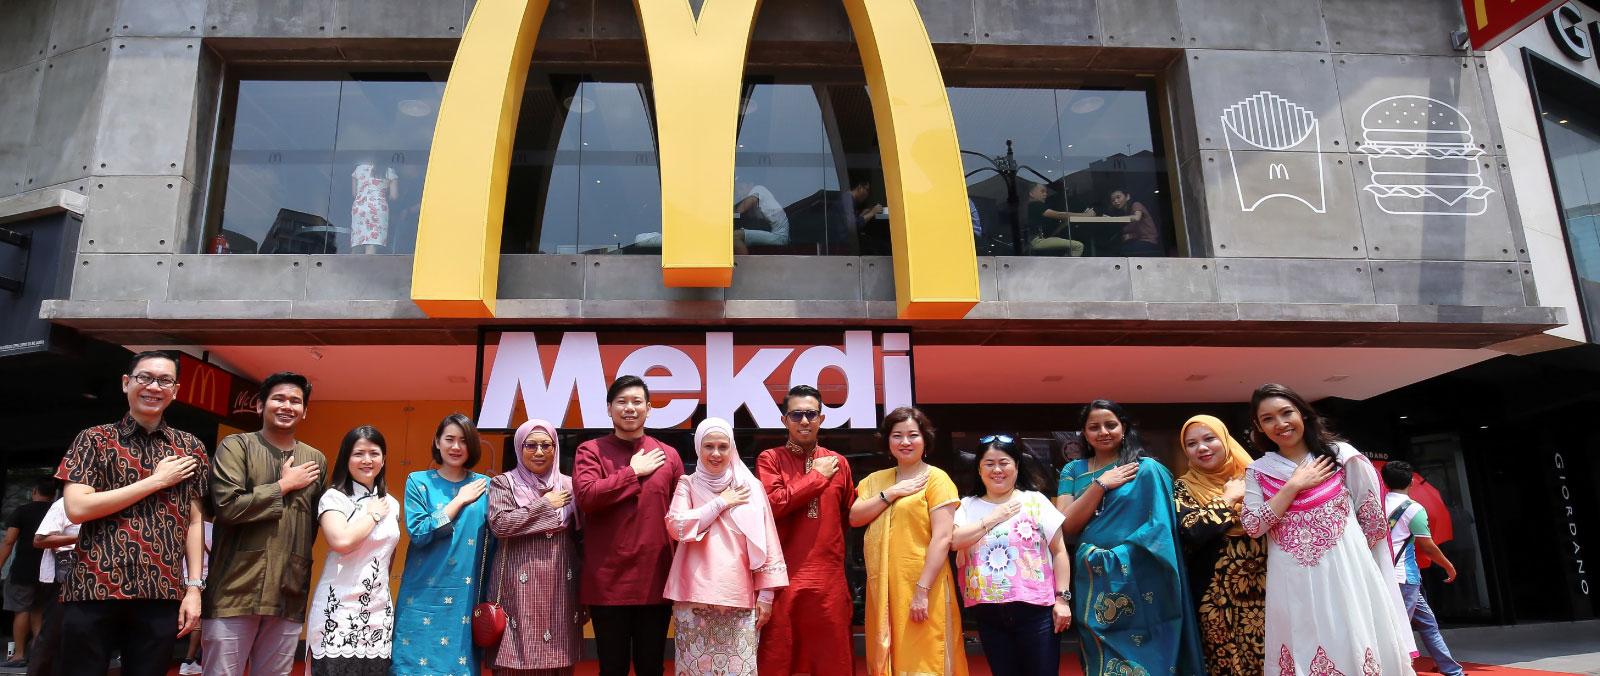 McDonald’s Malaysia celebrates being Malaysian! 's image'